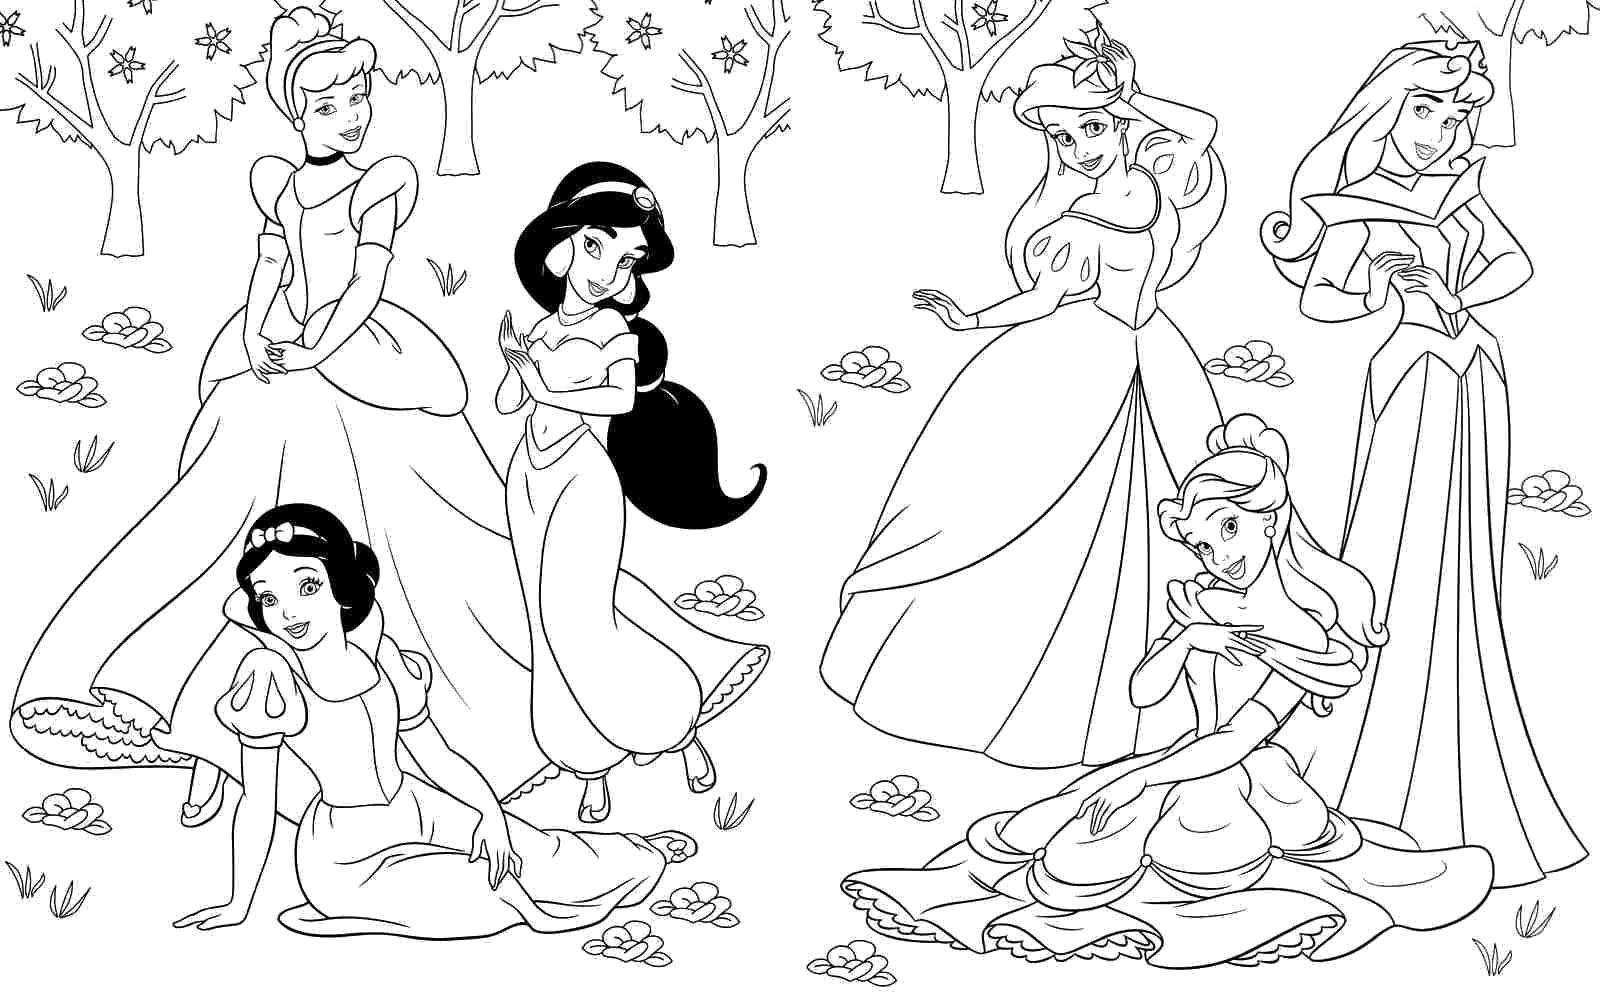 Coloring Sleeping beauty, Belle, Cinderella, Jasmine, Ariel and snow white. Category Disney cartoons. Tags:  Disney, Princess.